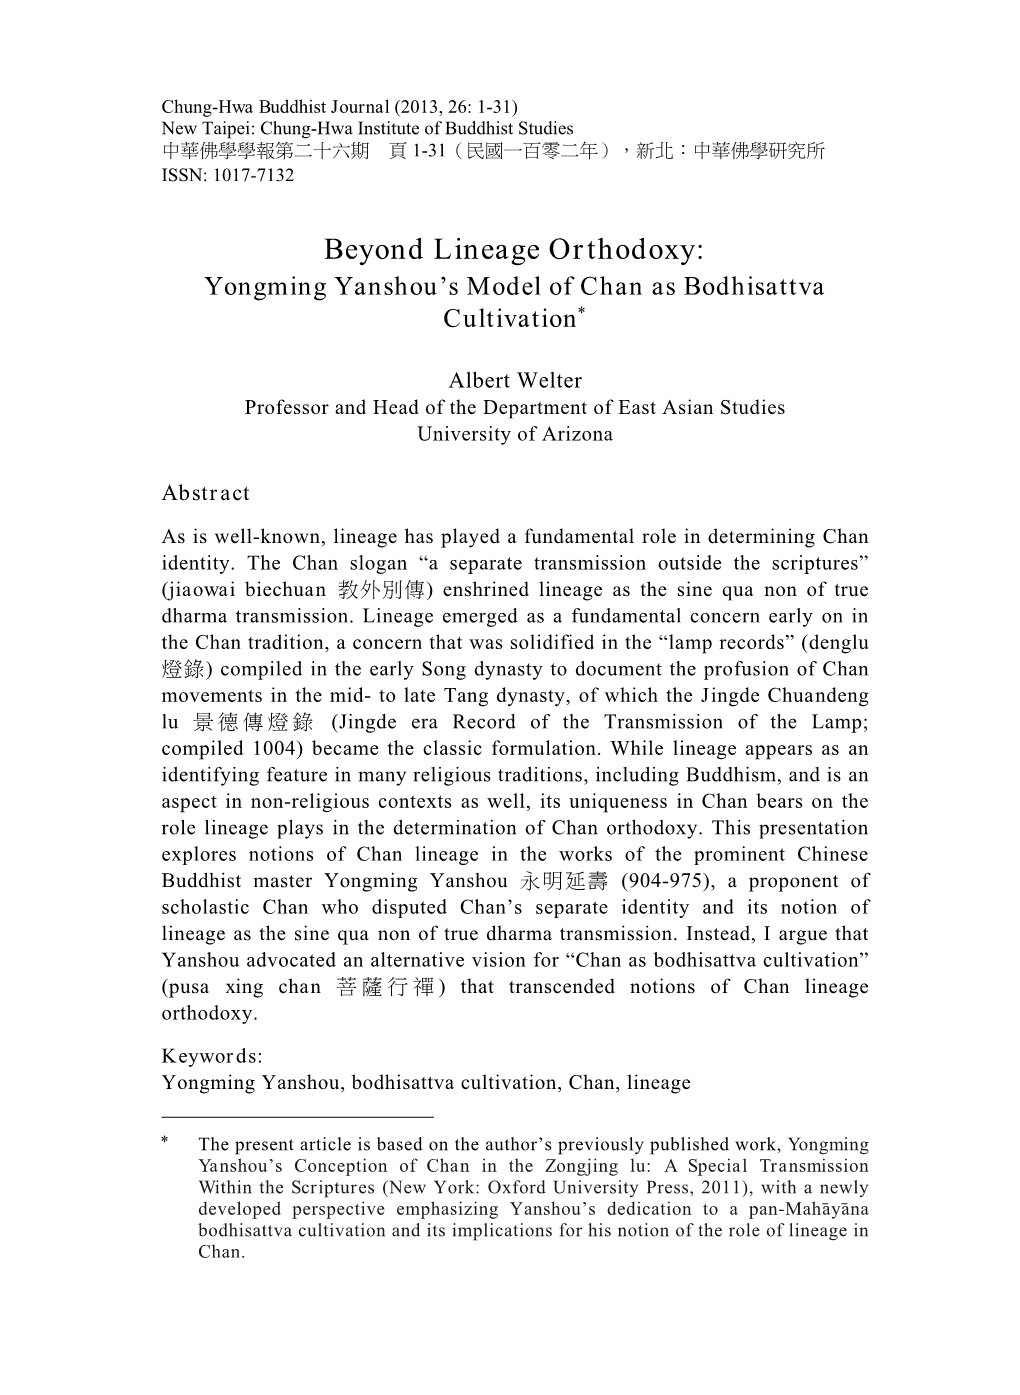 Beyond Lineage Orthodoxy: Yongming Yanshou's Model of Chan As Bodhisattva Cultivation